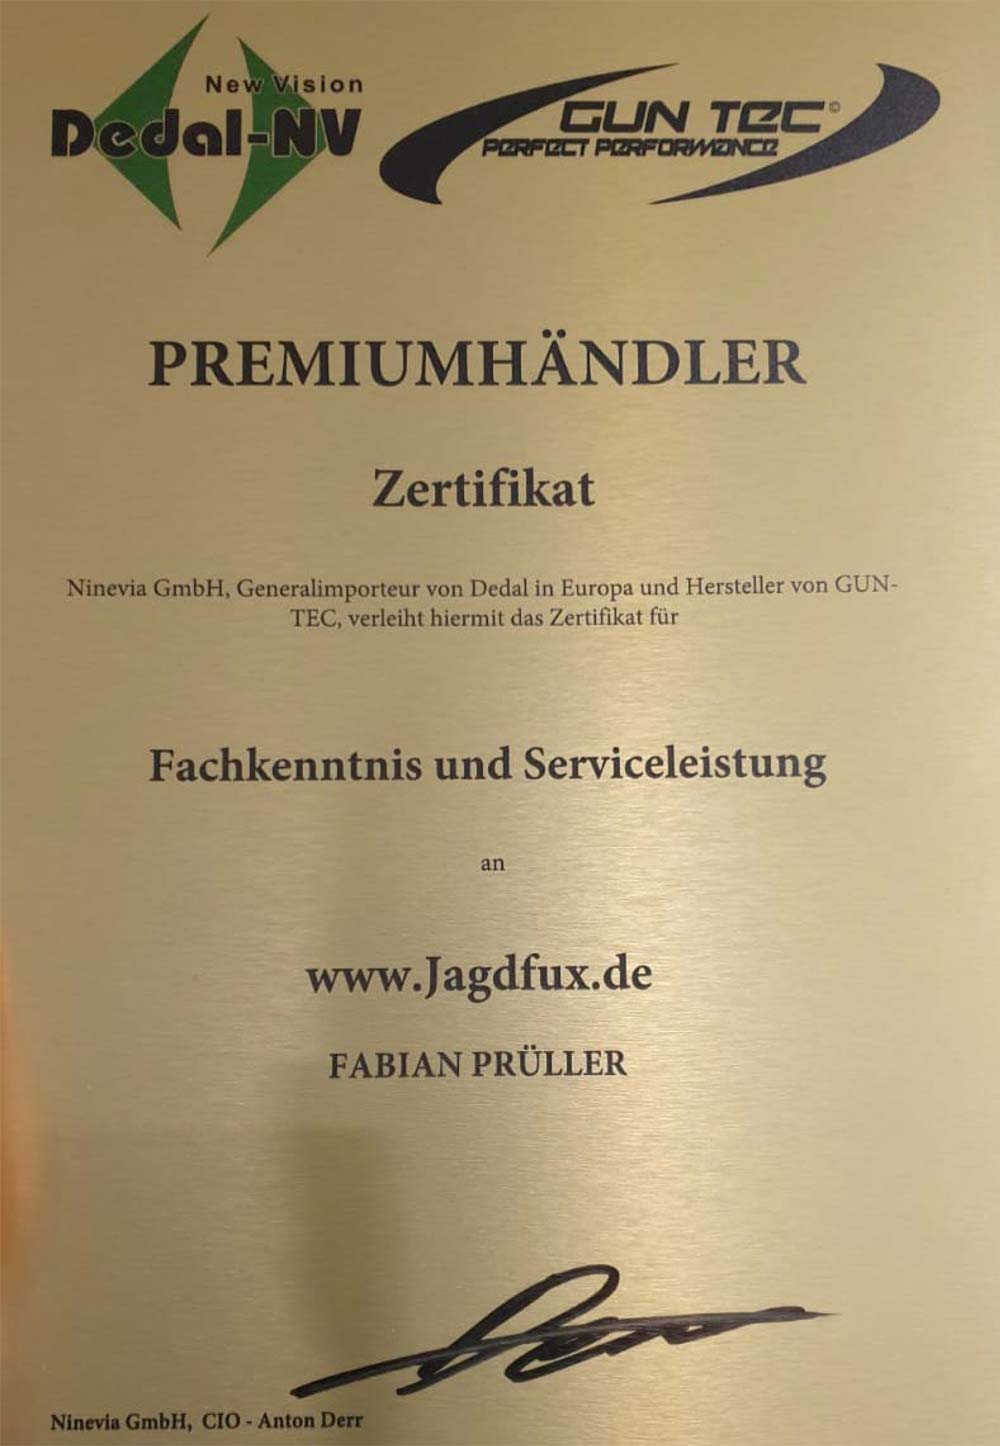 Jagdfux Zertifikat - Dedal Premiumhändler